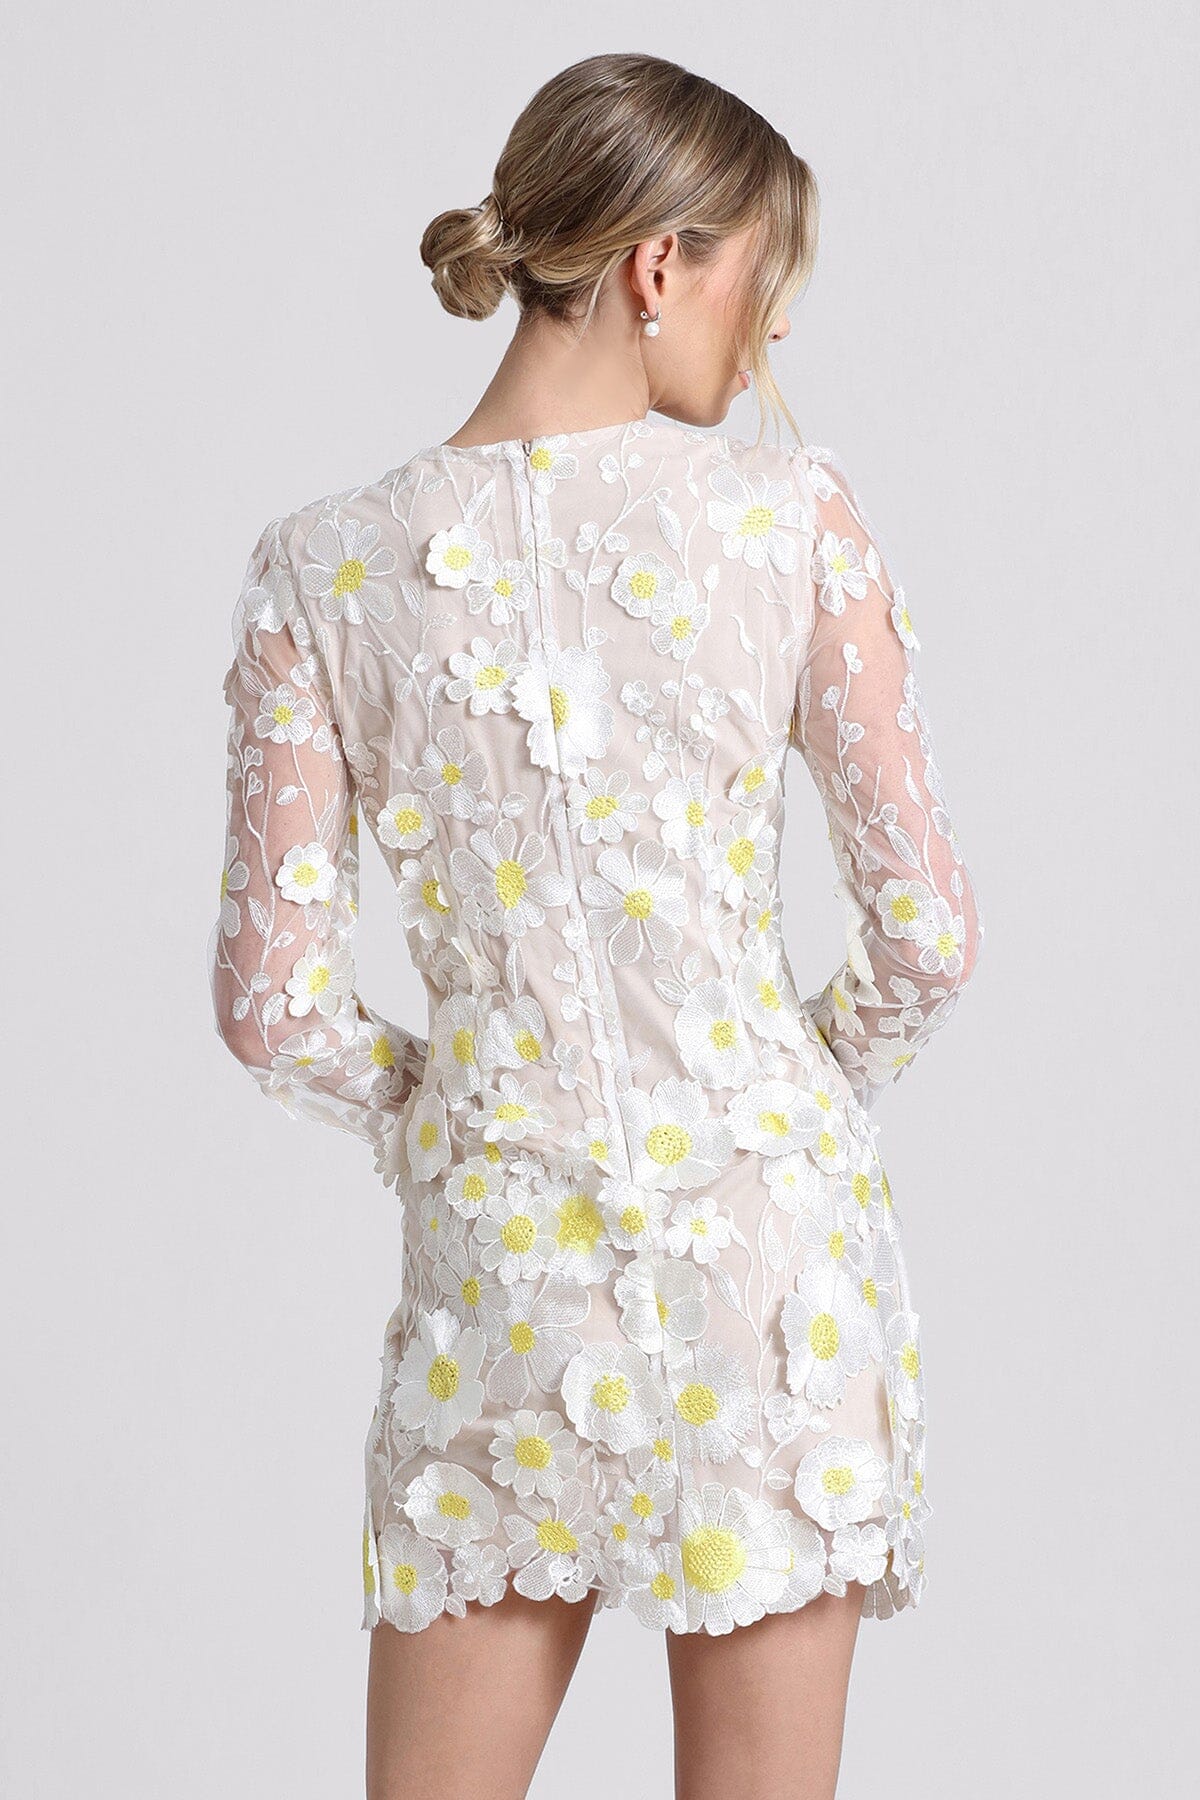 White long sleeve embroidered mini dress daisy flower applique - women's figure flattering summer date night dresses by Avec Les Filles